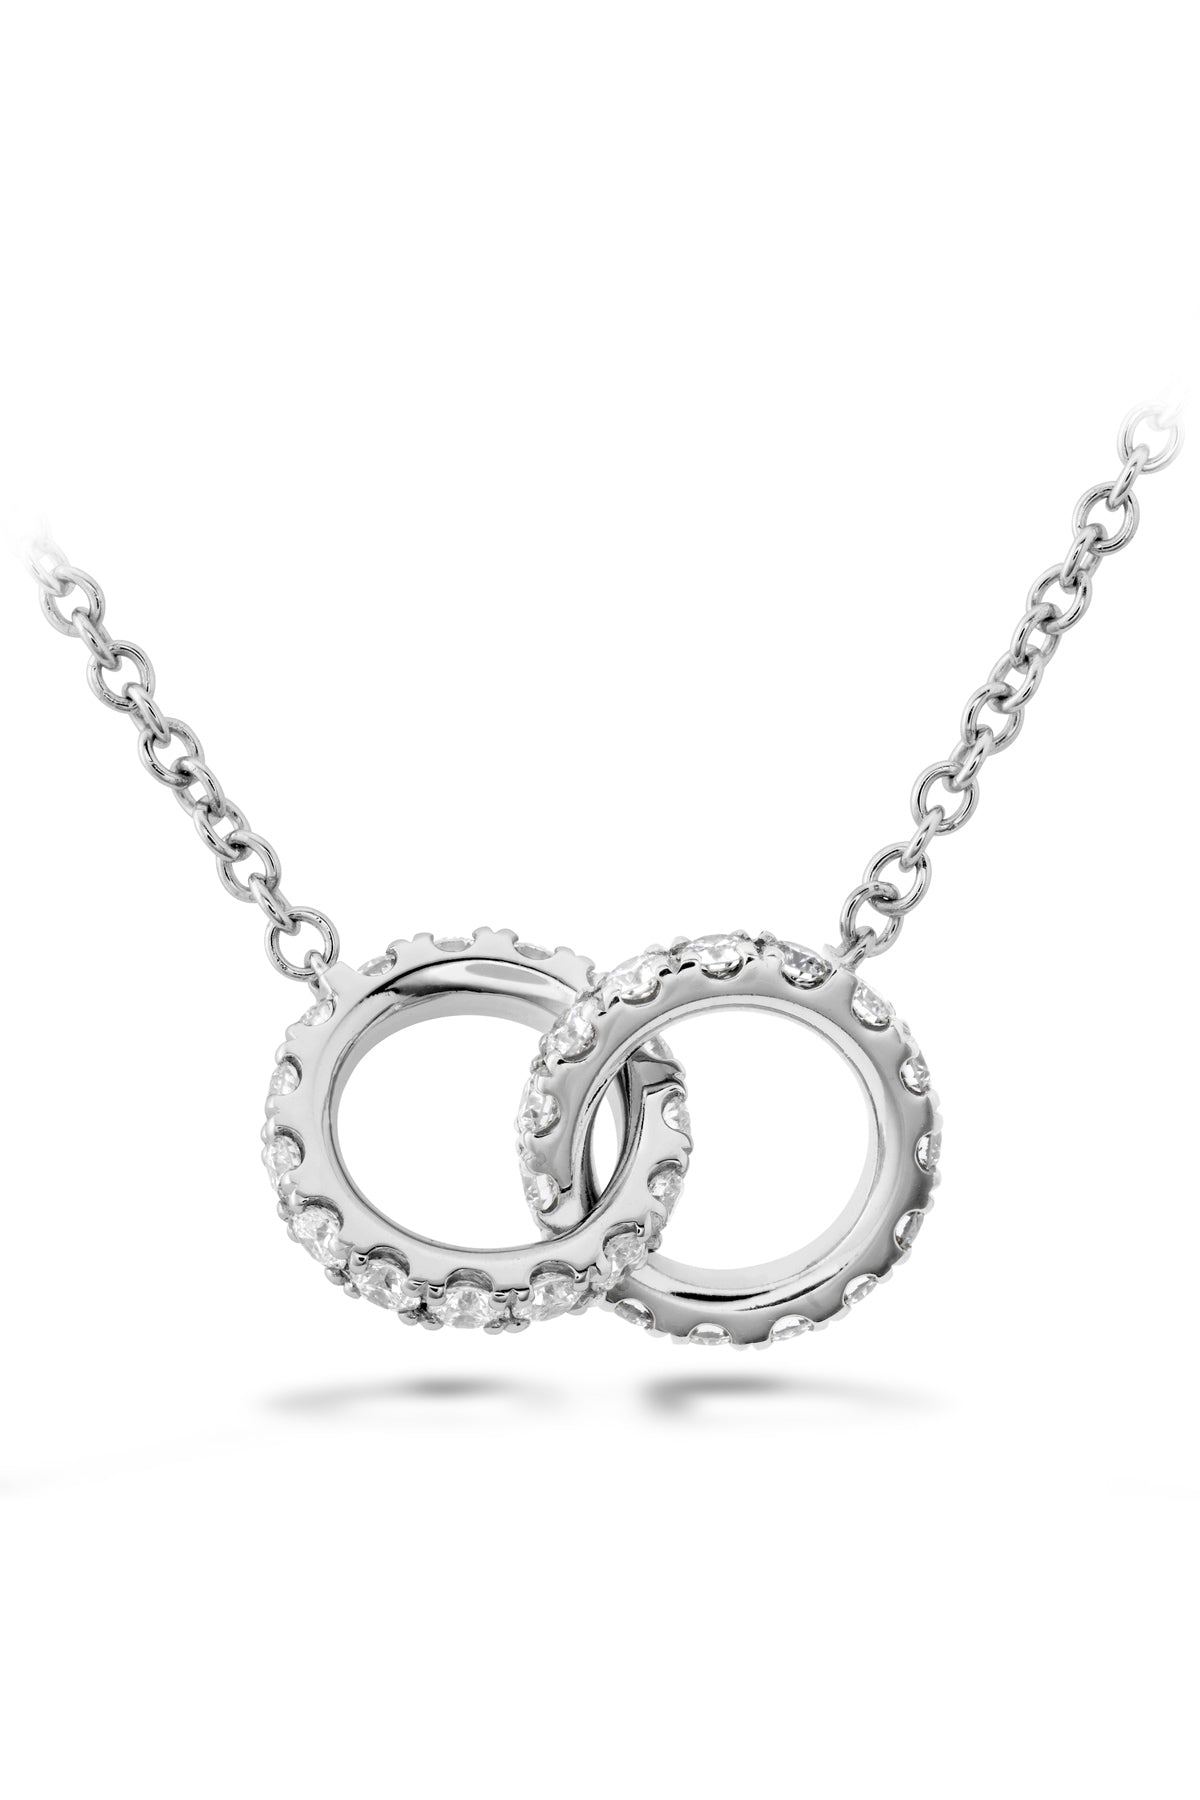 Classic Diamond Interlocking Pendant From Hearts On Fire available at LeGassick Diamonds and Jewellery Gold Coast, Australia.